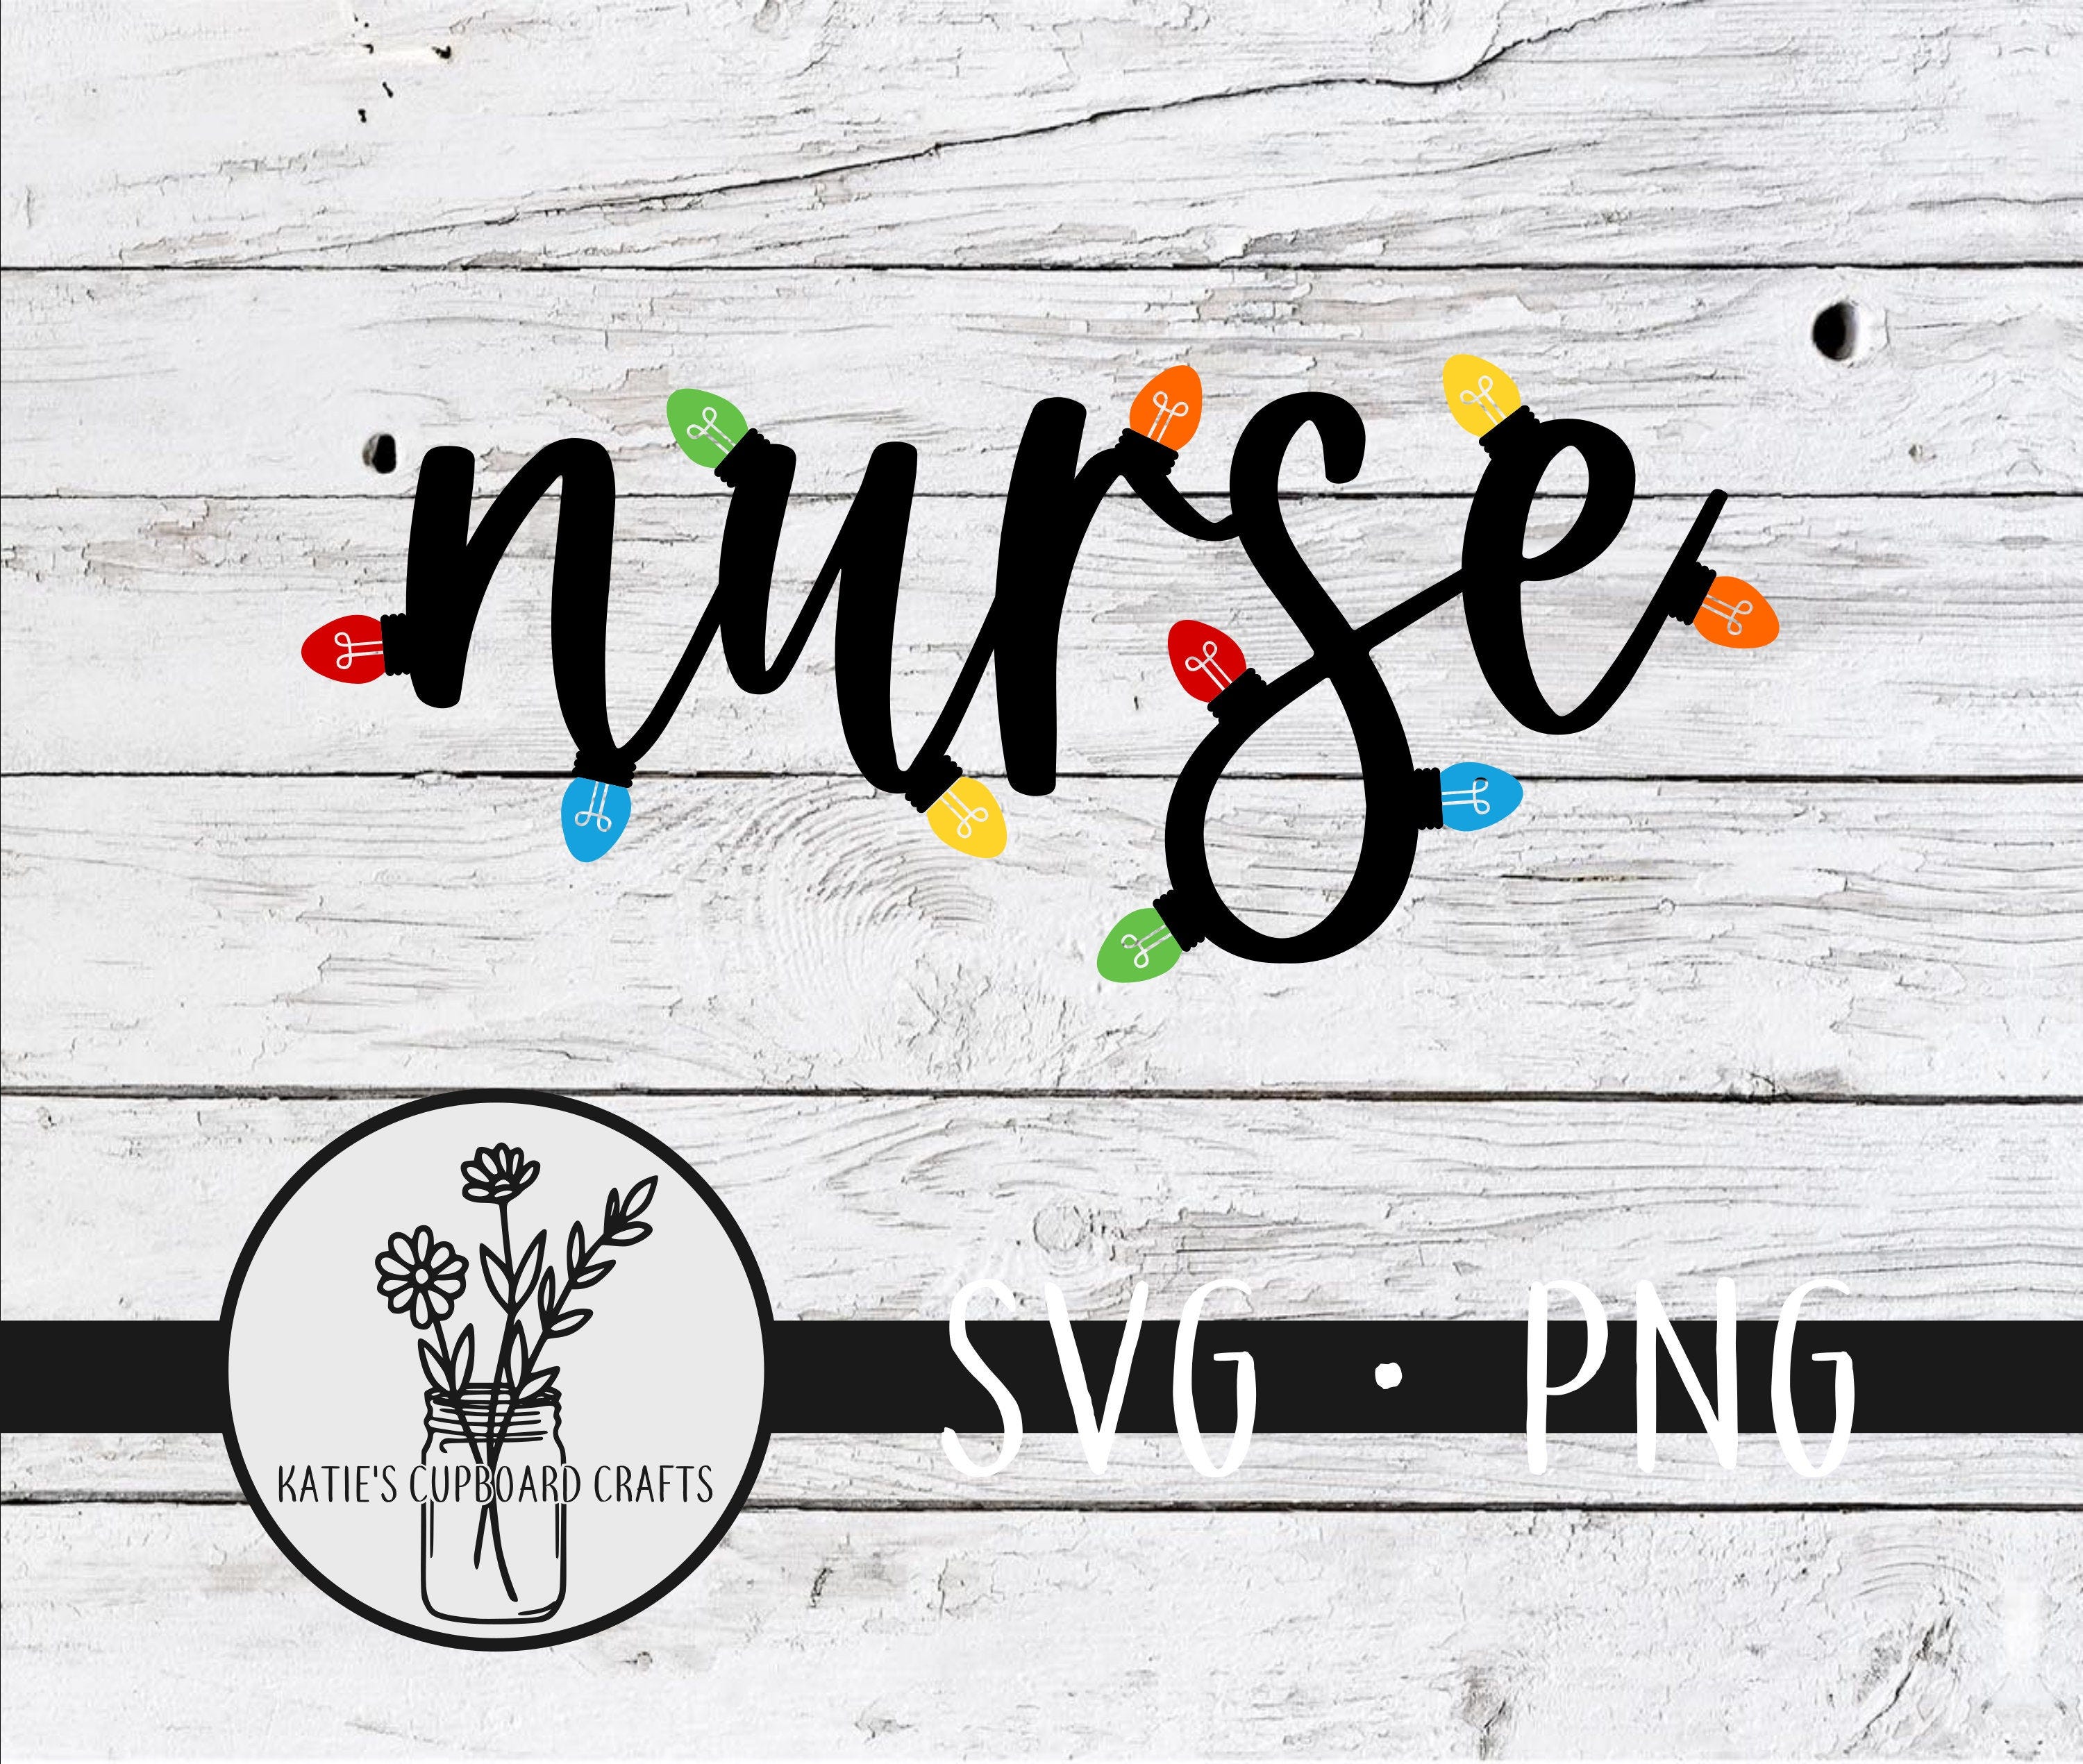 Nurse with Holiday Lights - SVG Cut File